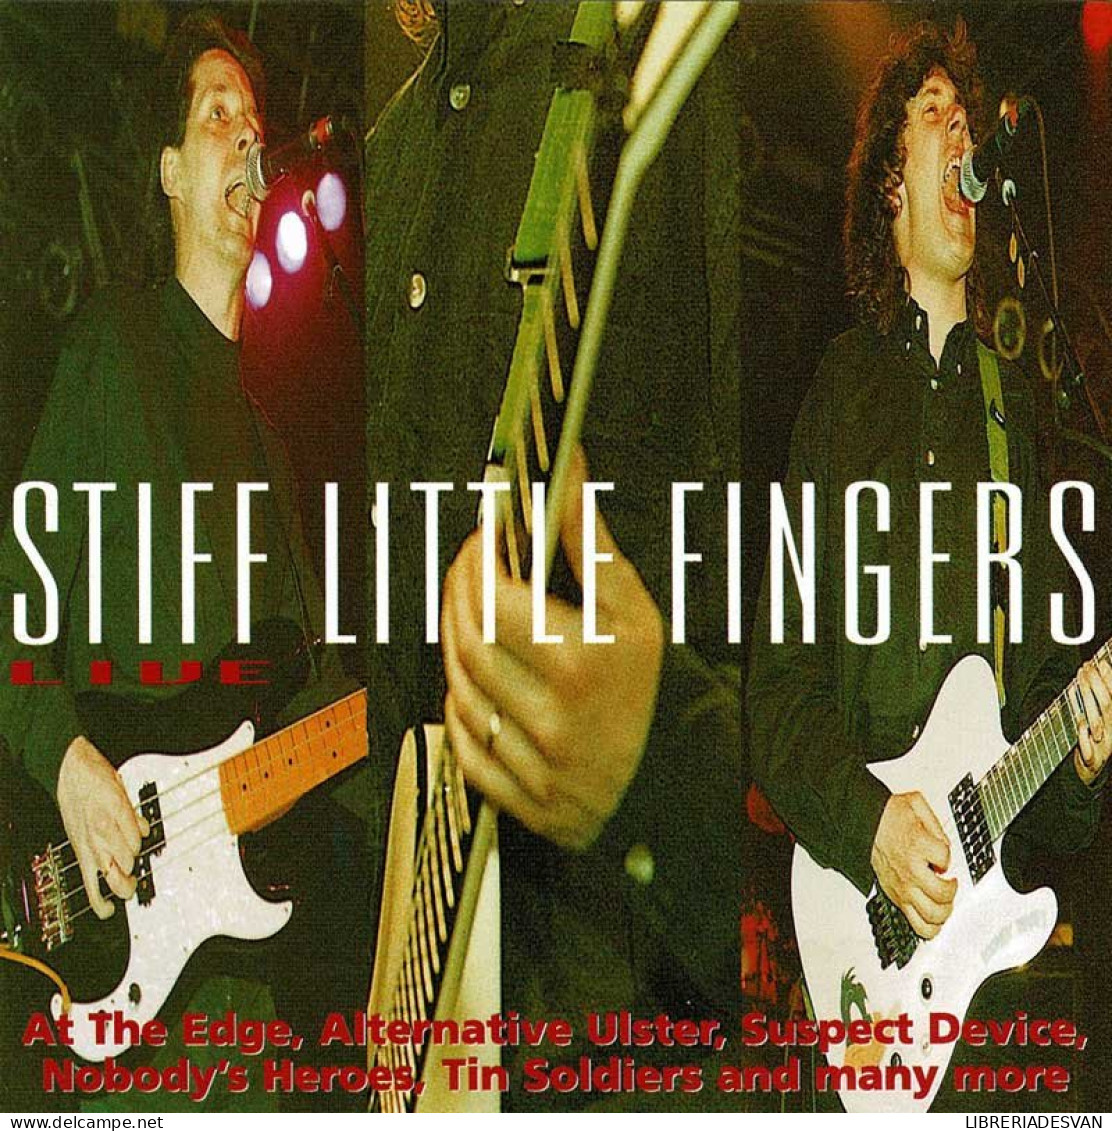 Stiff Little Fingers - Live. CD - Rock